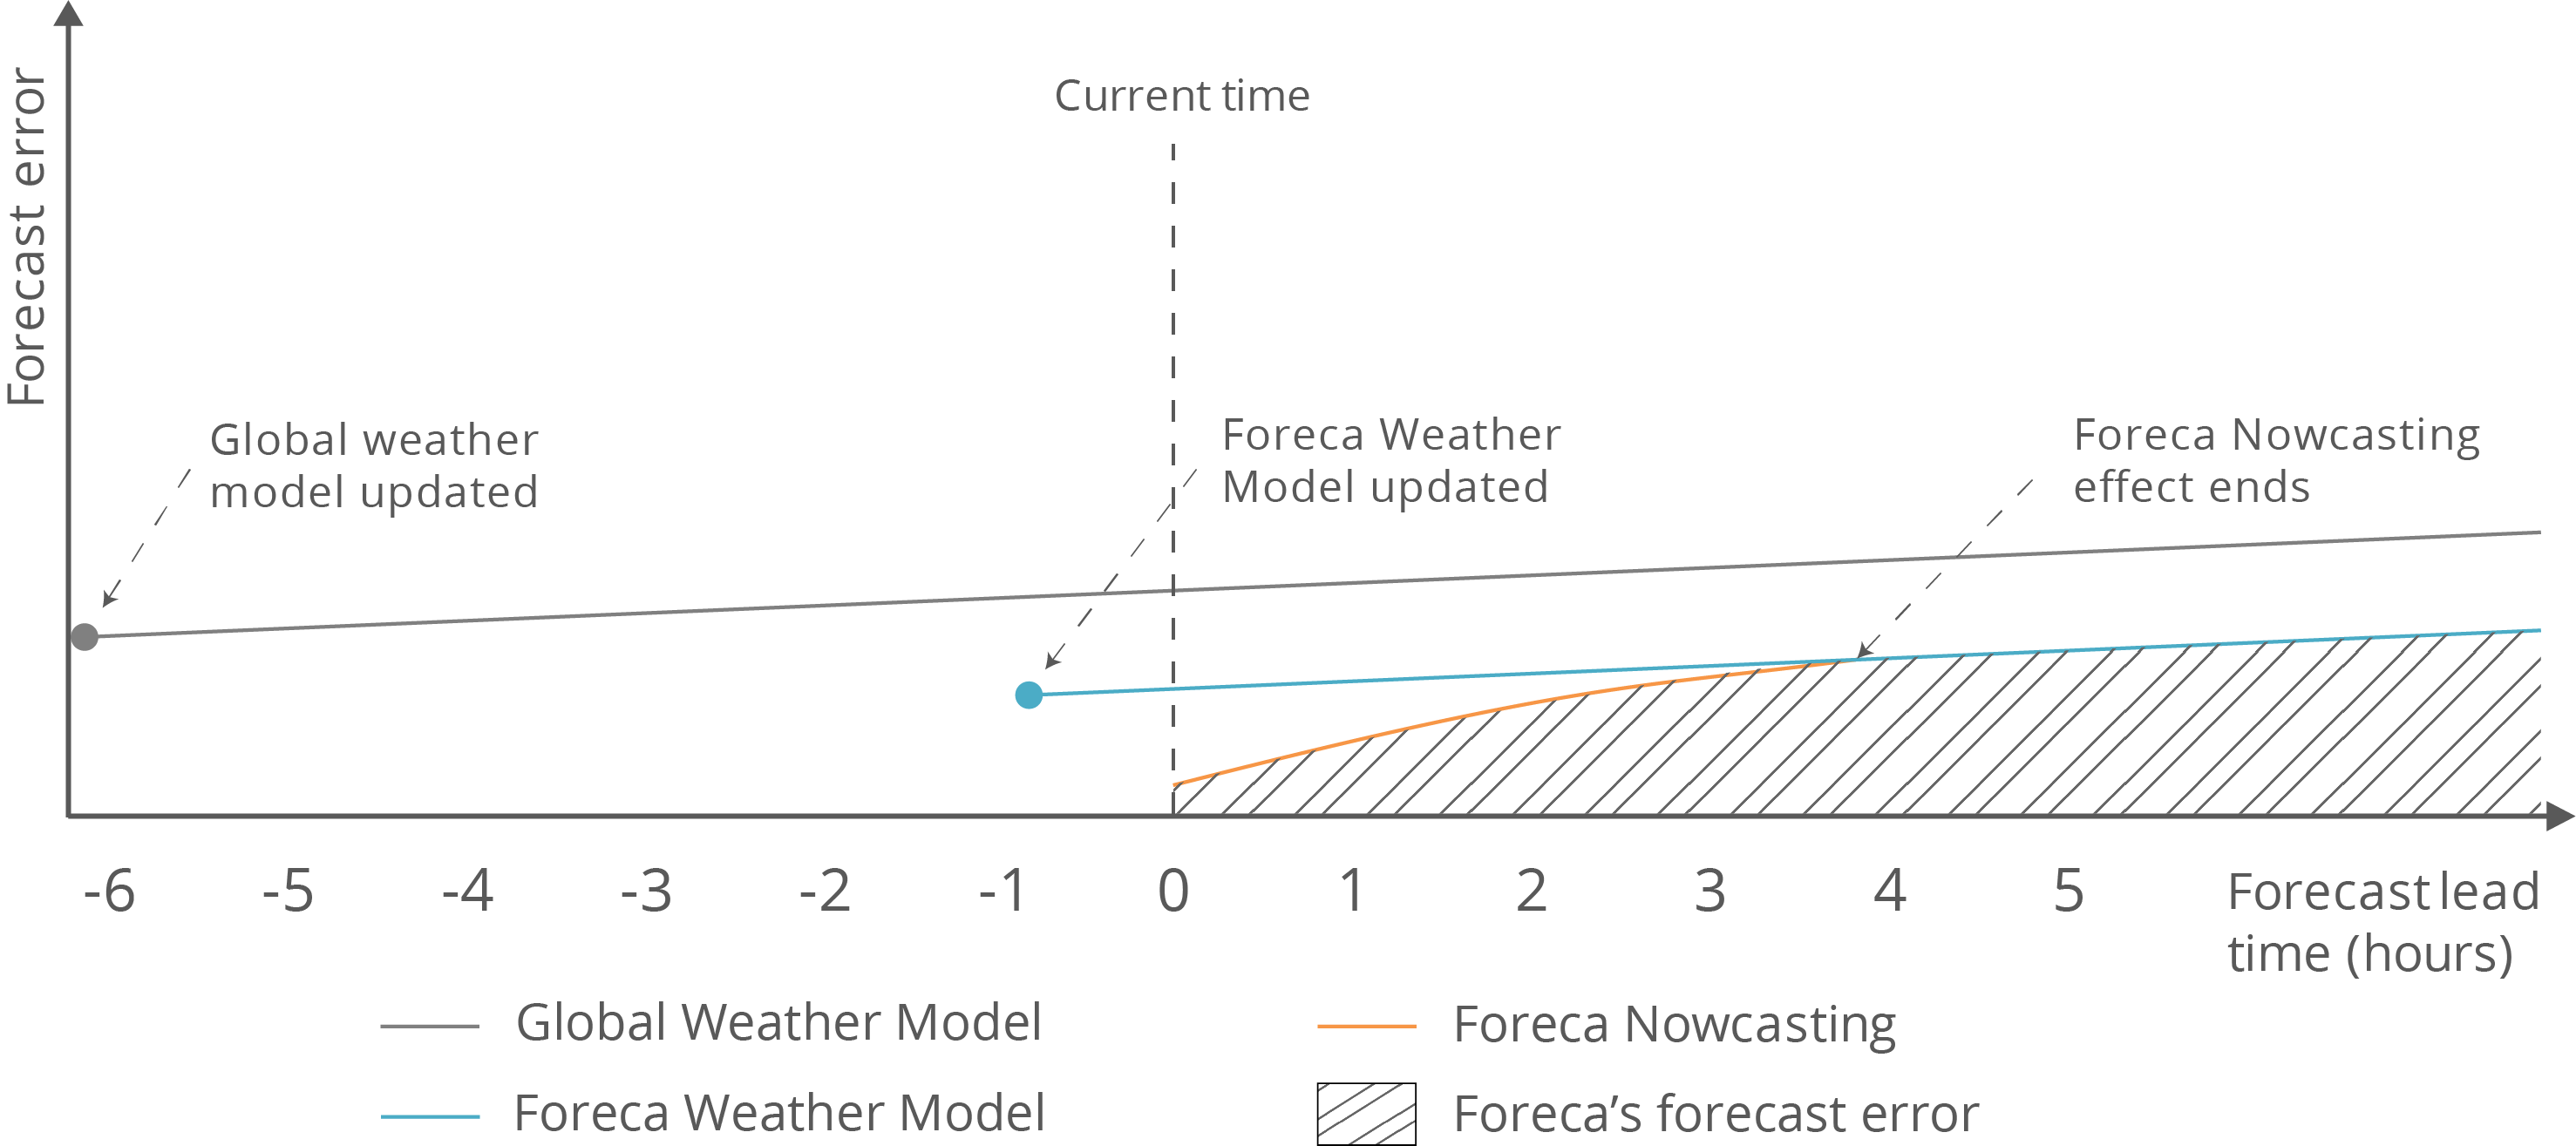 Nowcasting vs Foreca weather model error